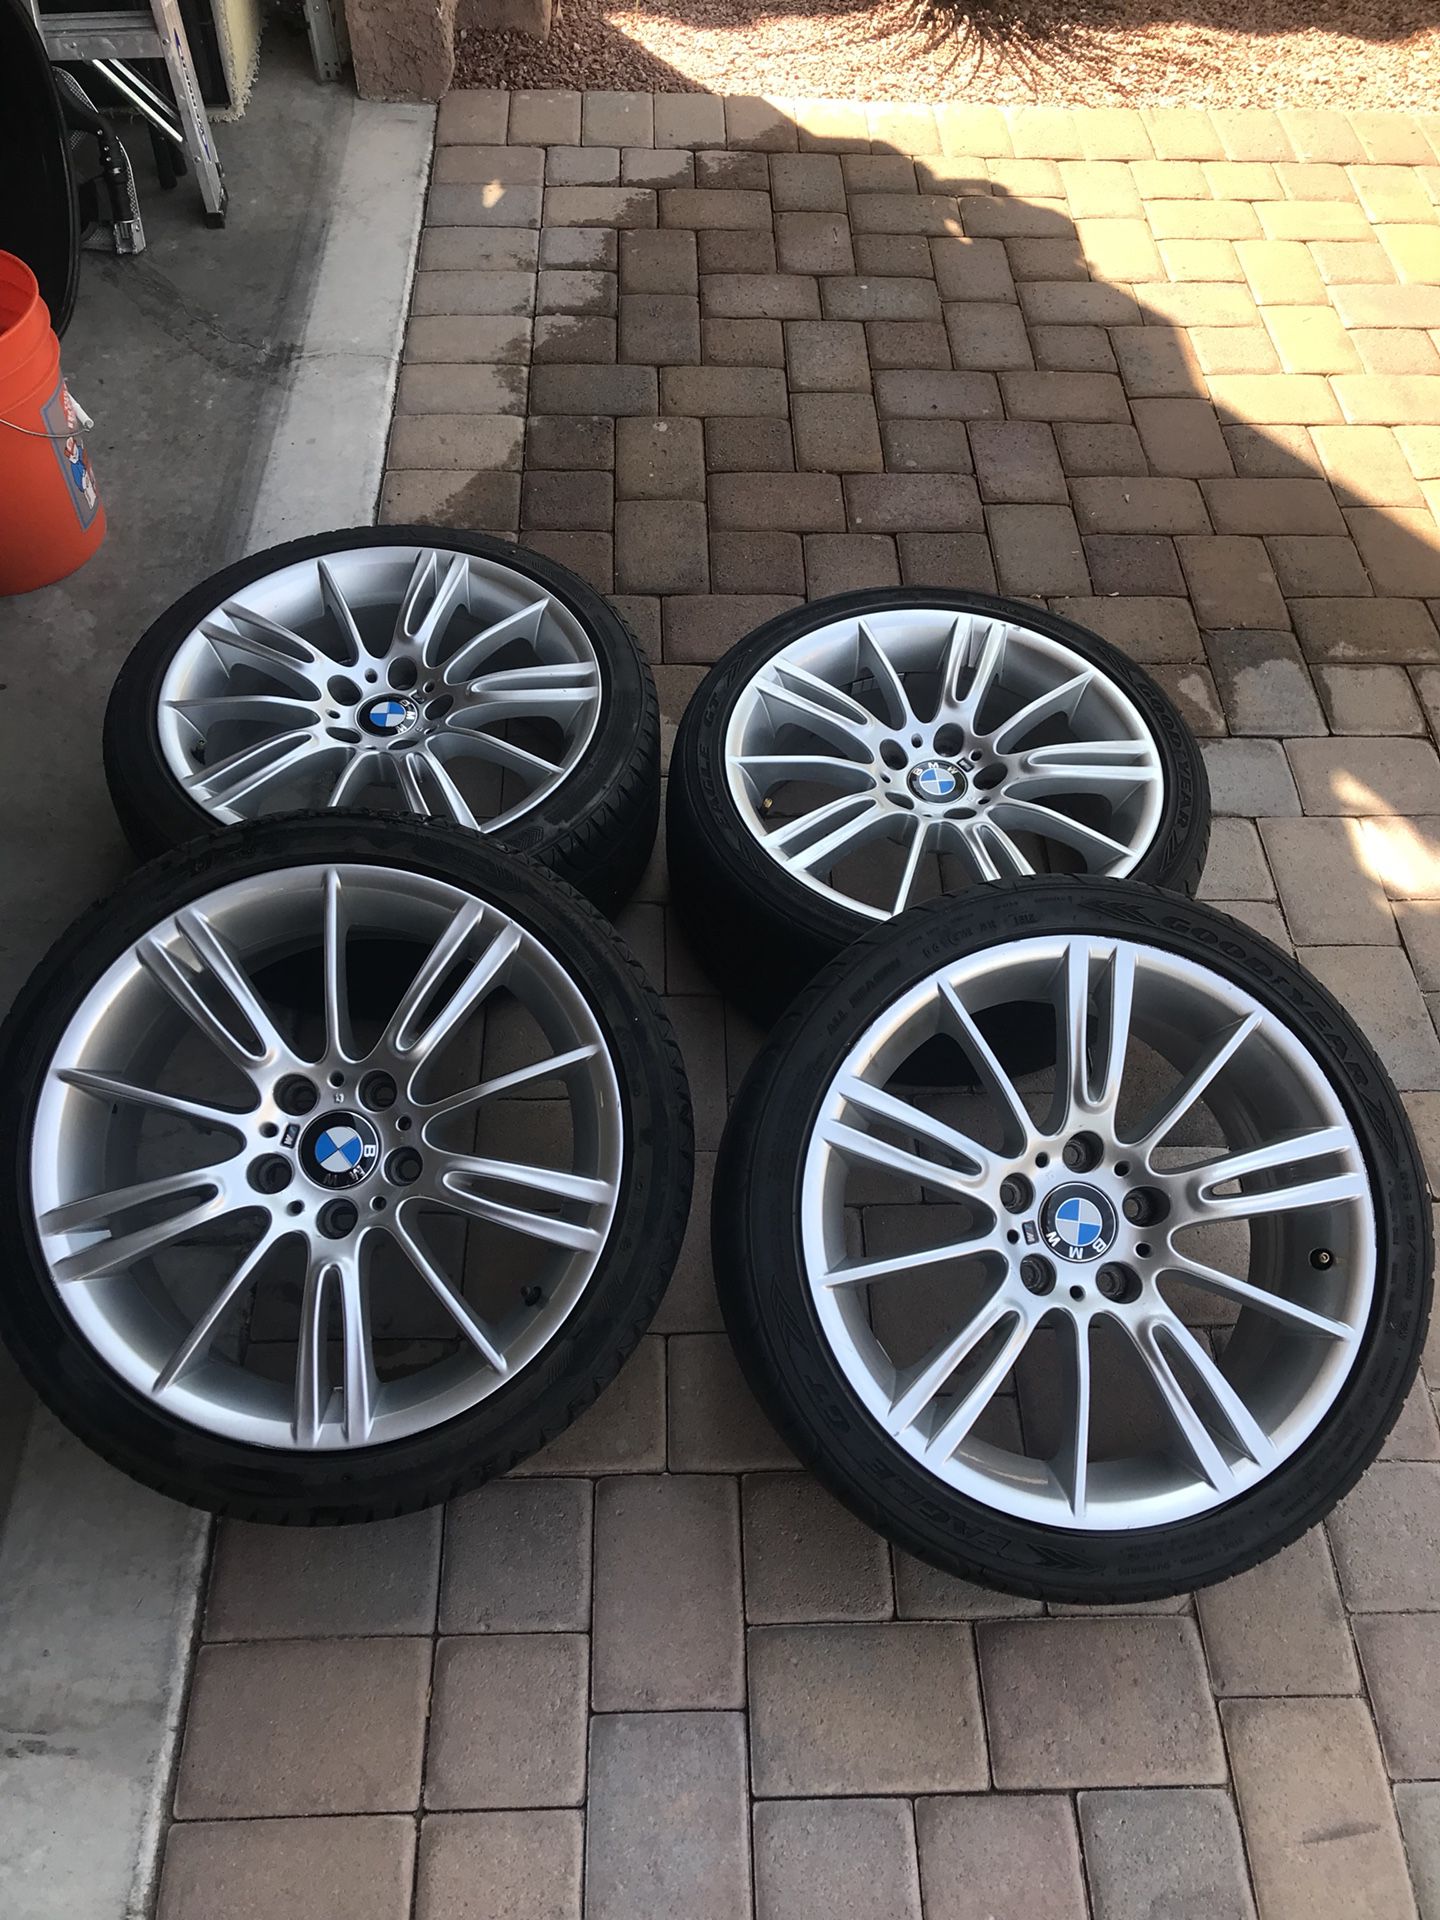 Draak rib Vete BMW 3 series staggered OEM 193m M-Sport 18 inch wheels rims 335i 328i 325i  e90 e92 e93- (South West Las Vegas) for Sale in Las Vegas, NV - OfferUp